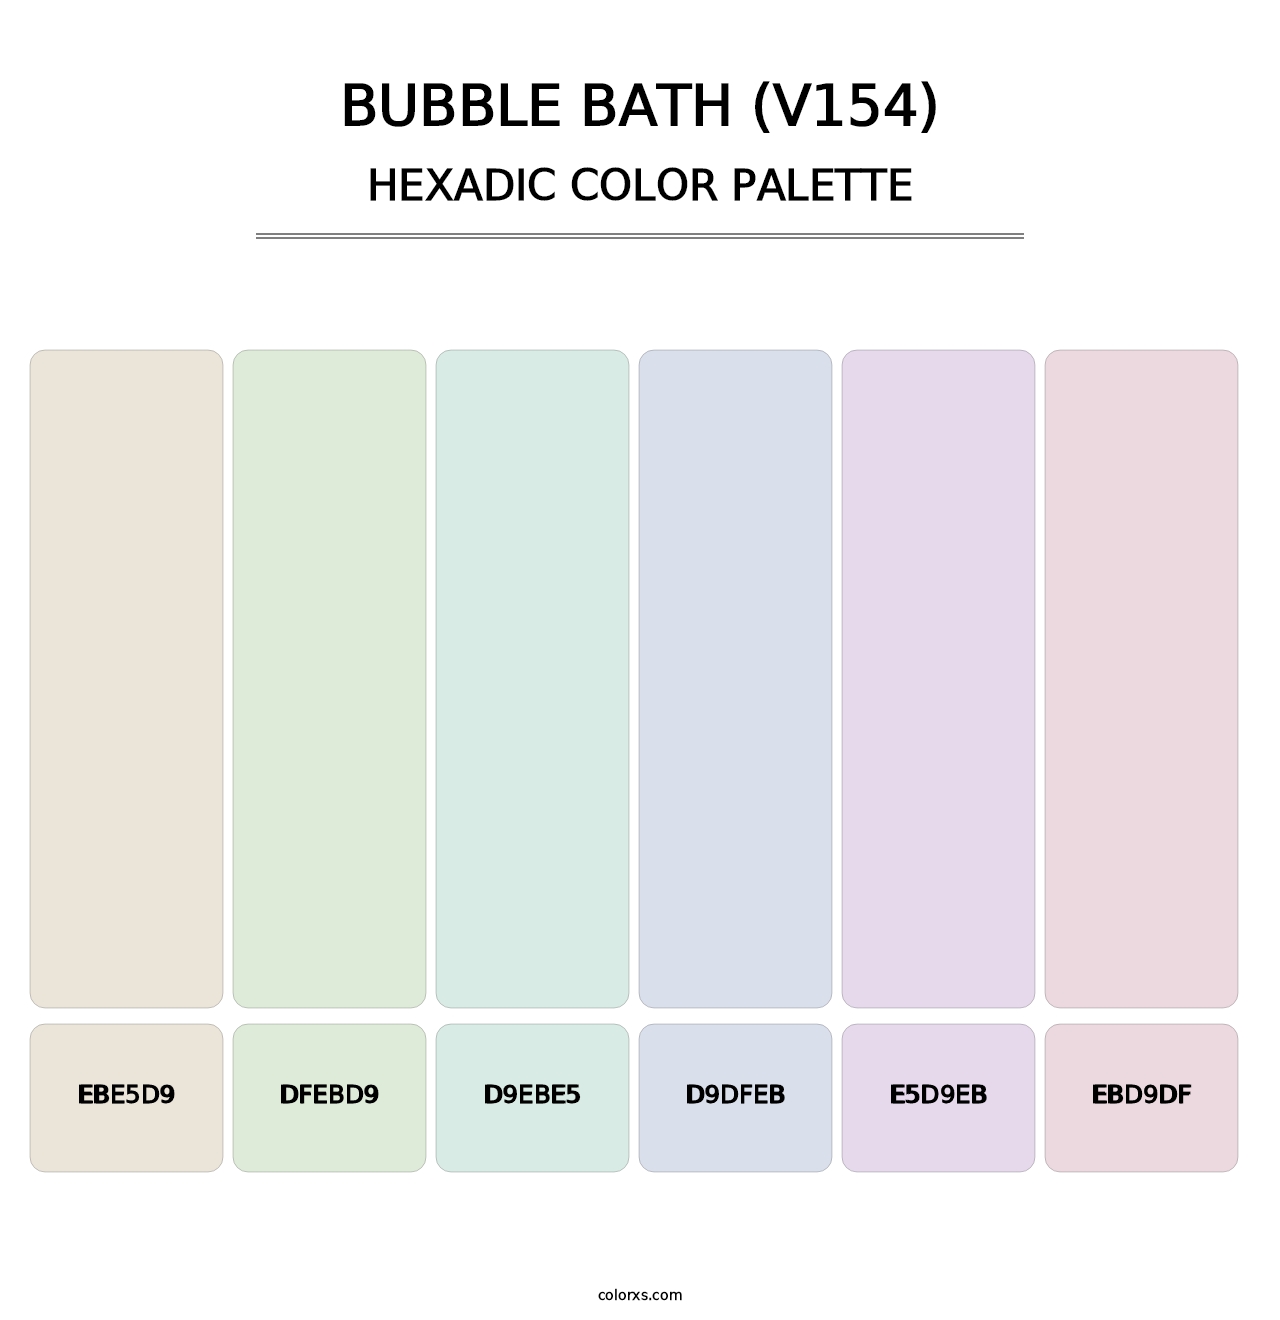 Bubble Bath (V154) - Hexadic Color Palette